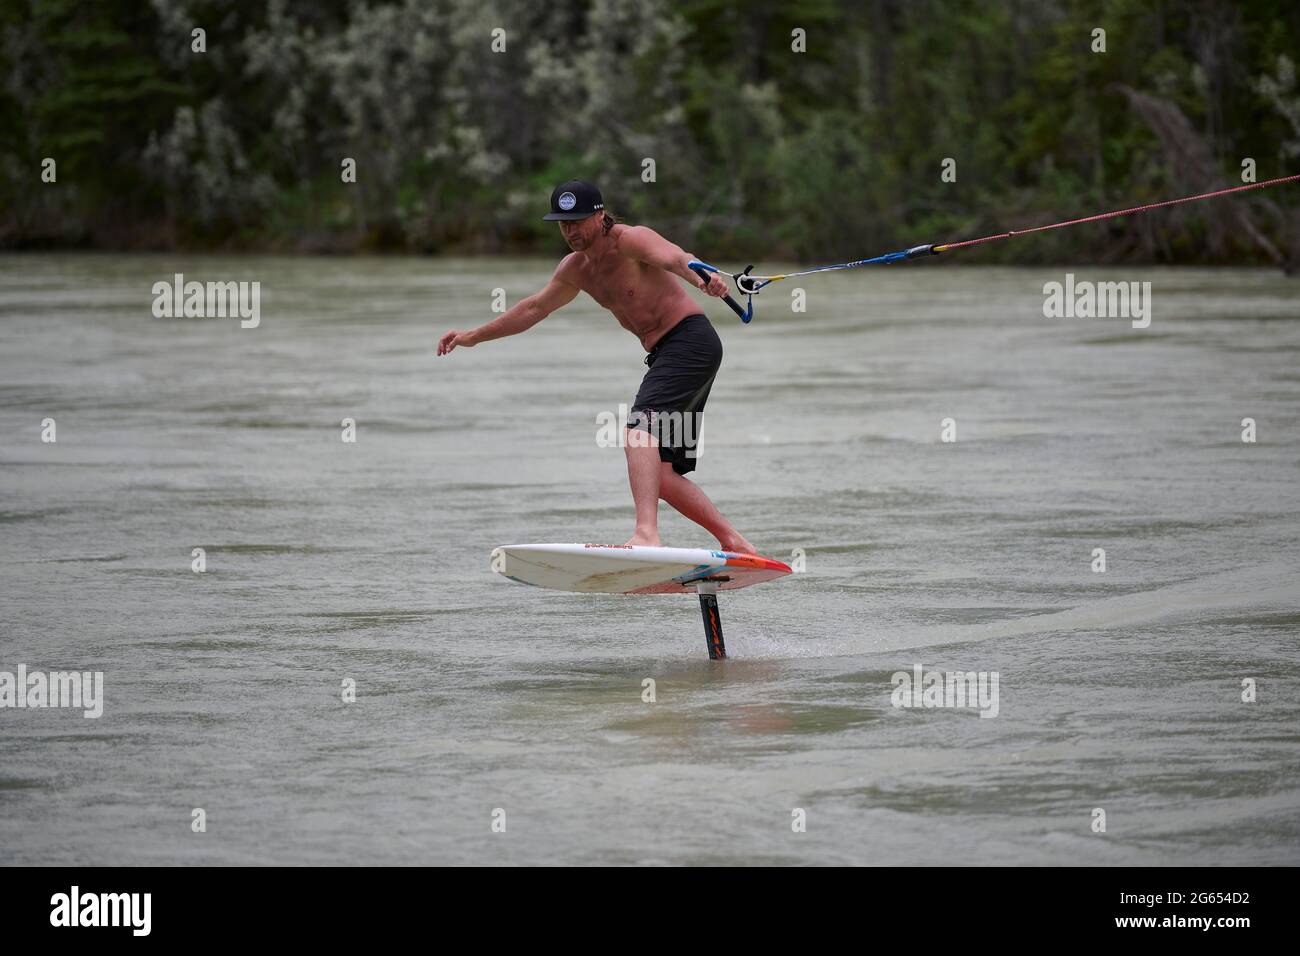 Todd Ril-Surfen (Foil Boarding) während des Flußes im Frühling im Bow River, Canmore, Alberta, Kanada. Stockfoto